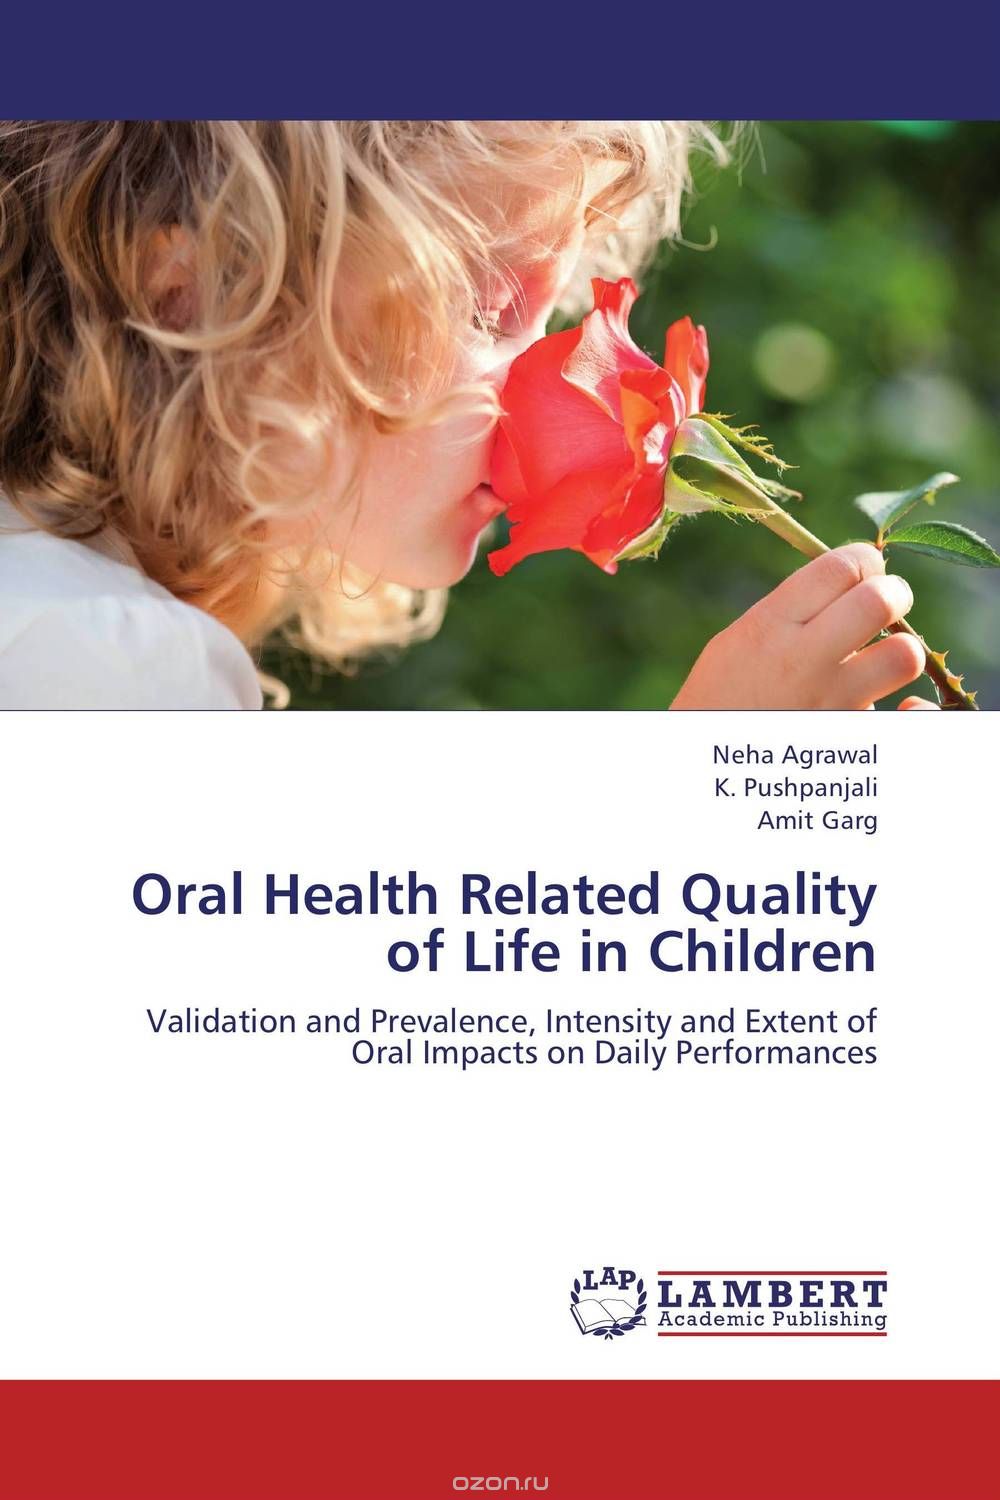 Скачать книгу "Oral Health Related Quality of Life in Children"